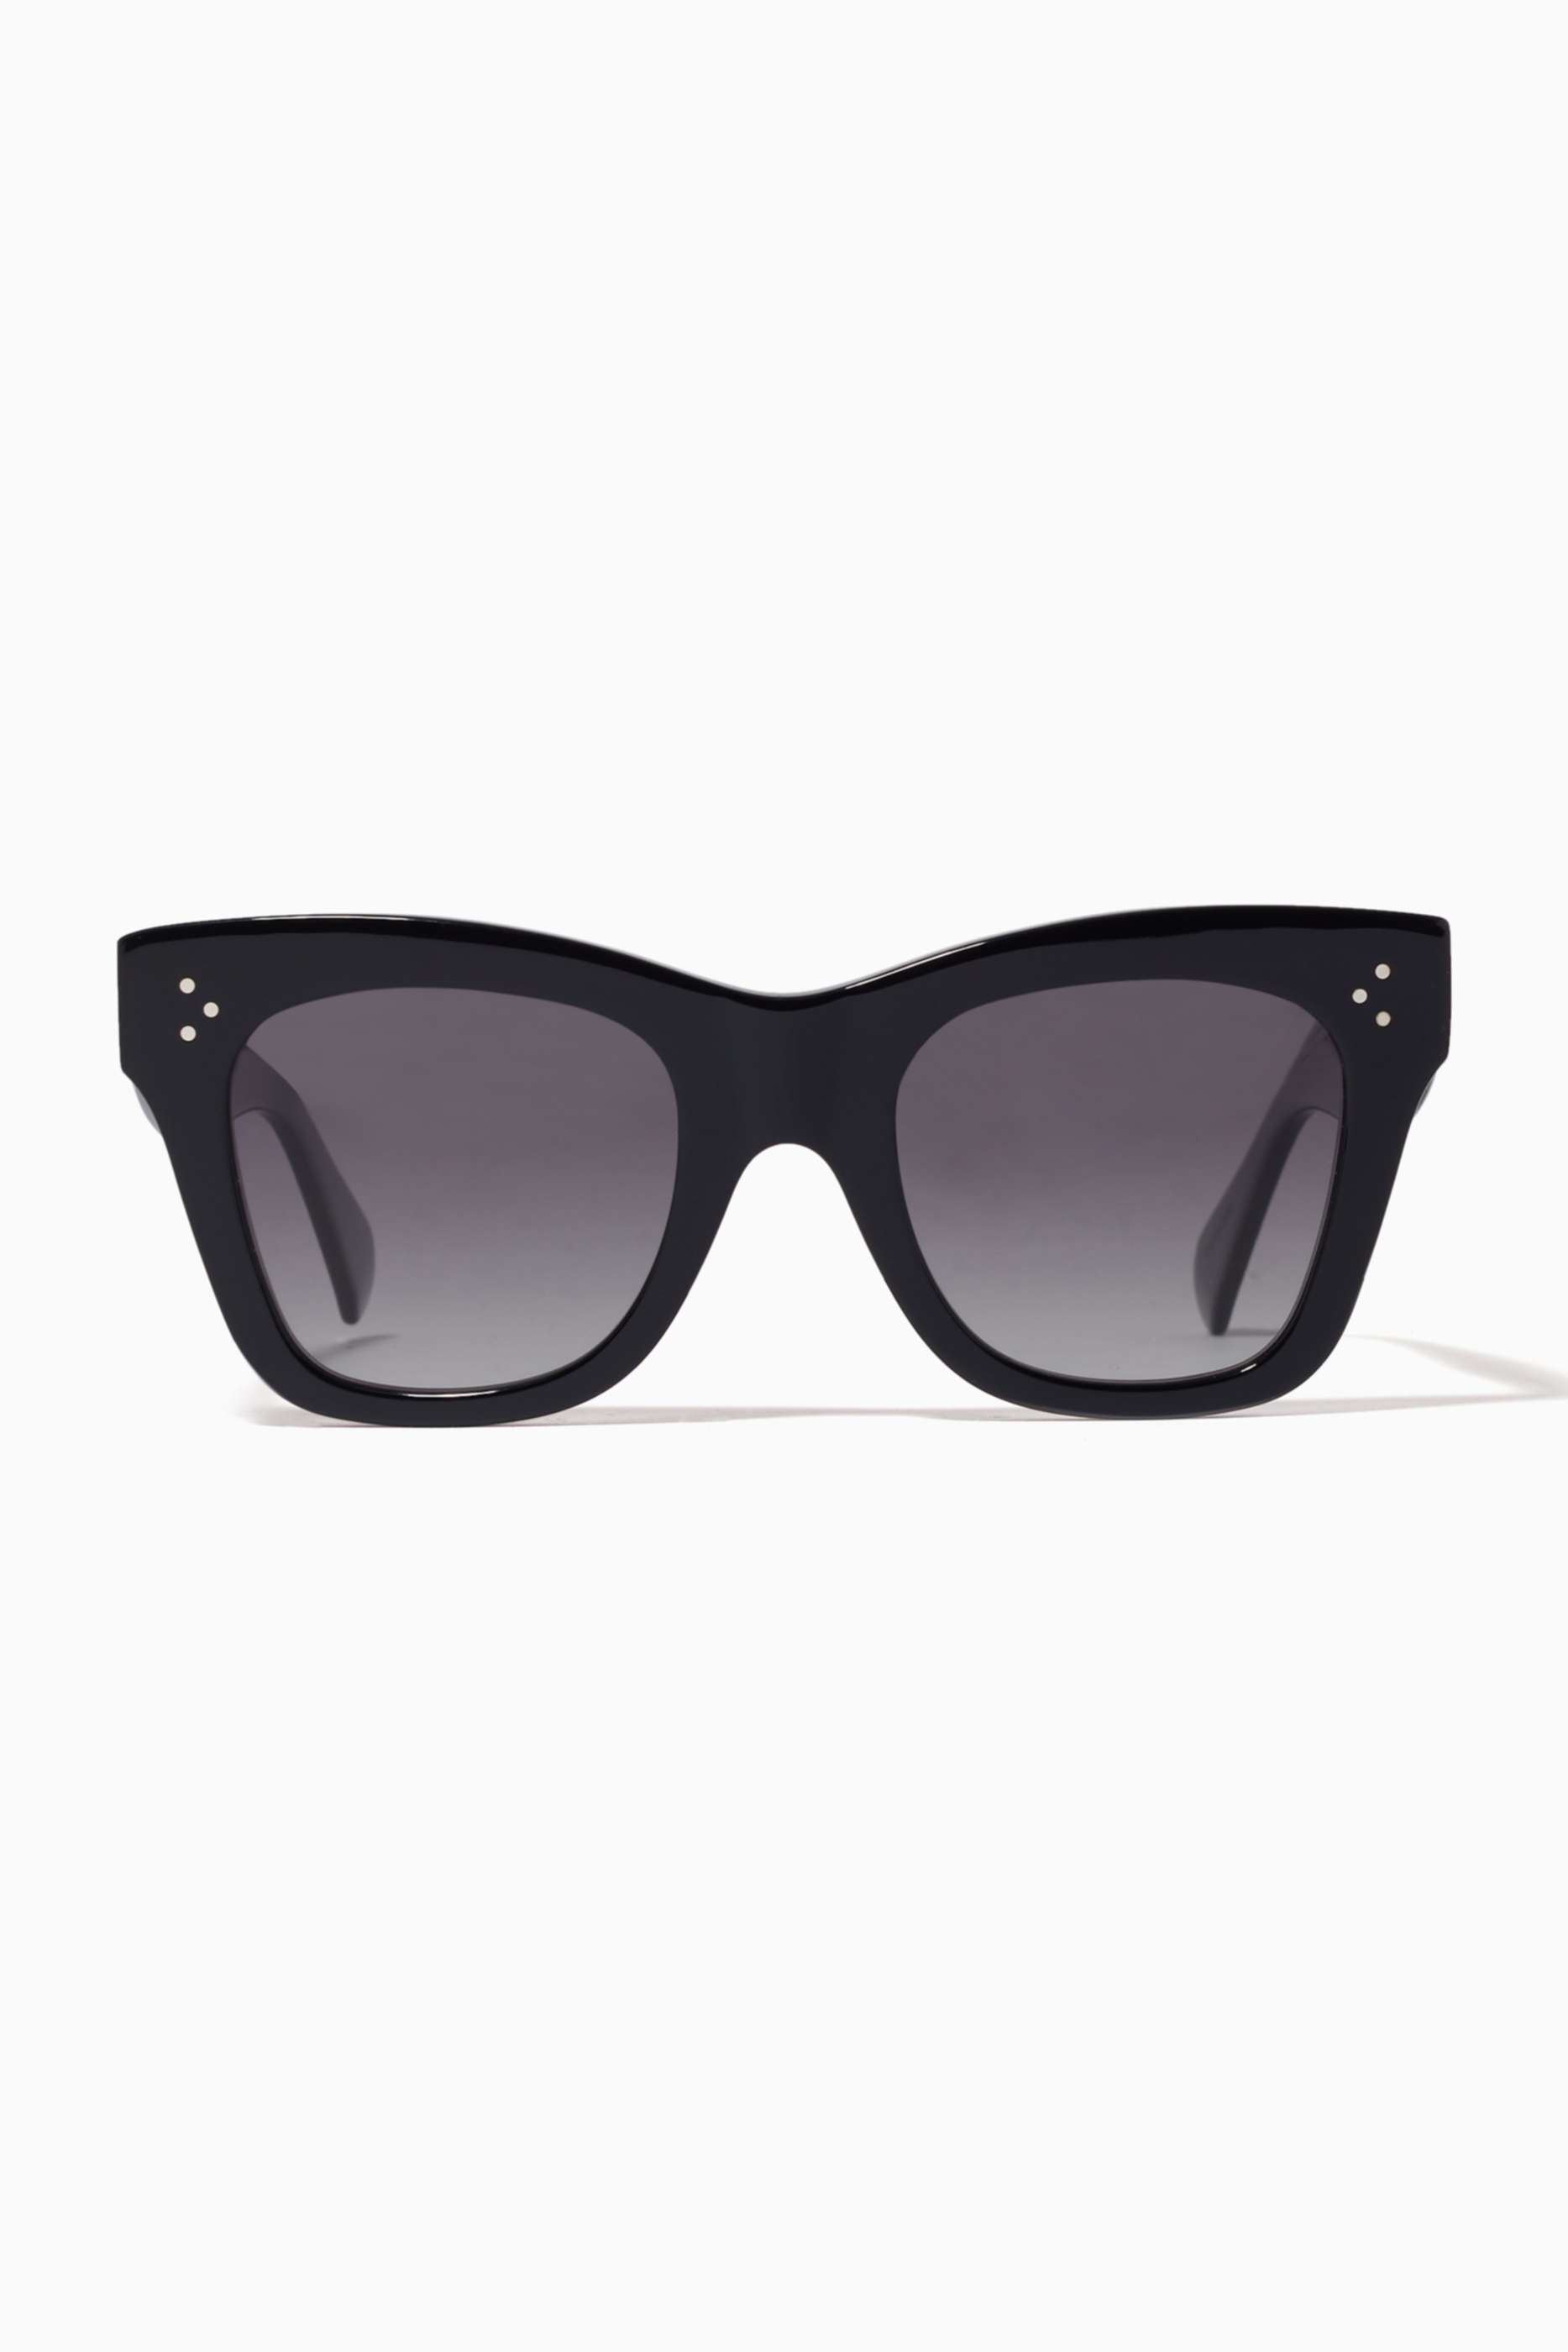 shop-celine-cat-eye-sunglasses-in-acetate-for-women